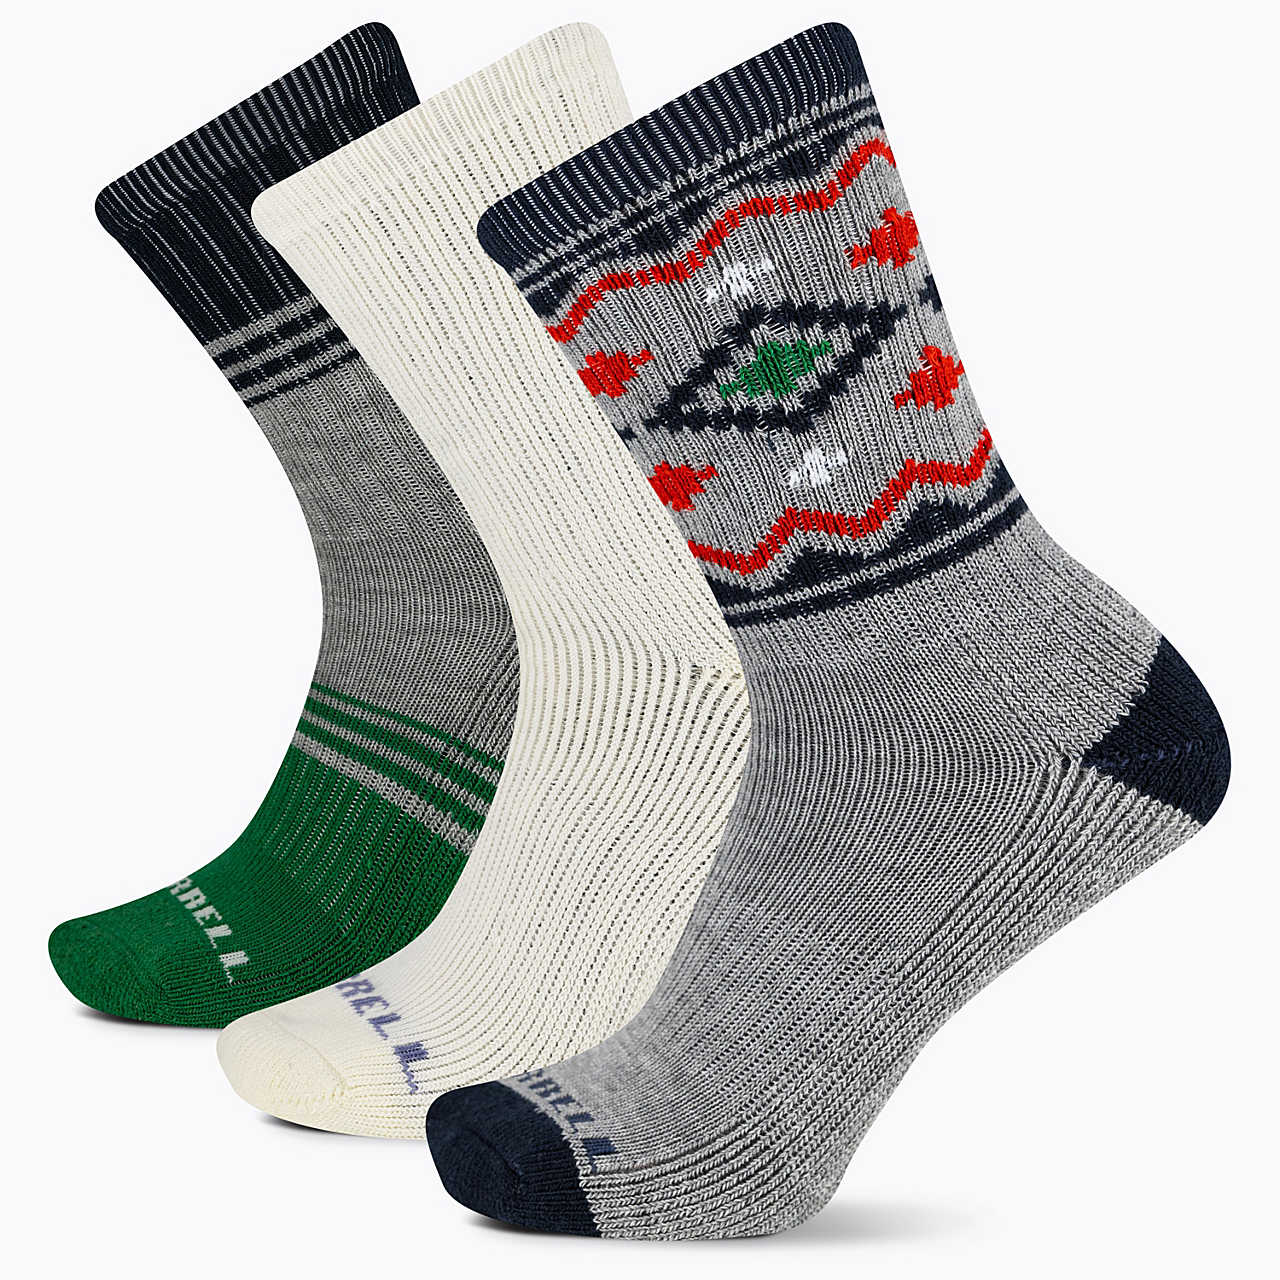 Clothing - Warm, Insulated Socks | Merrell